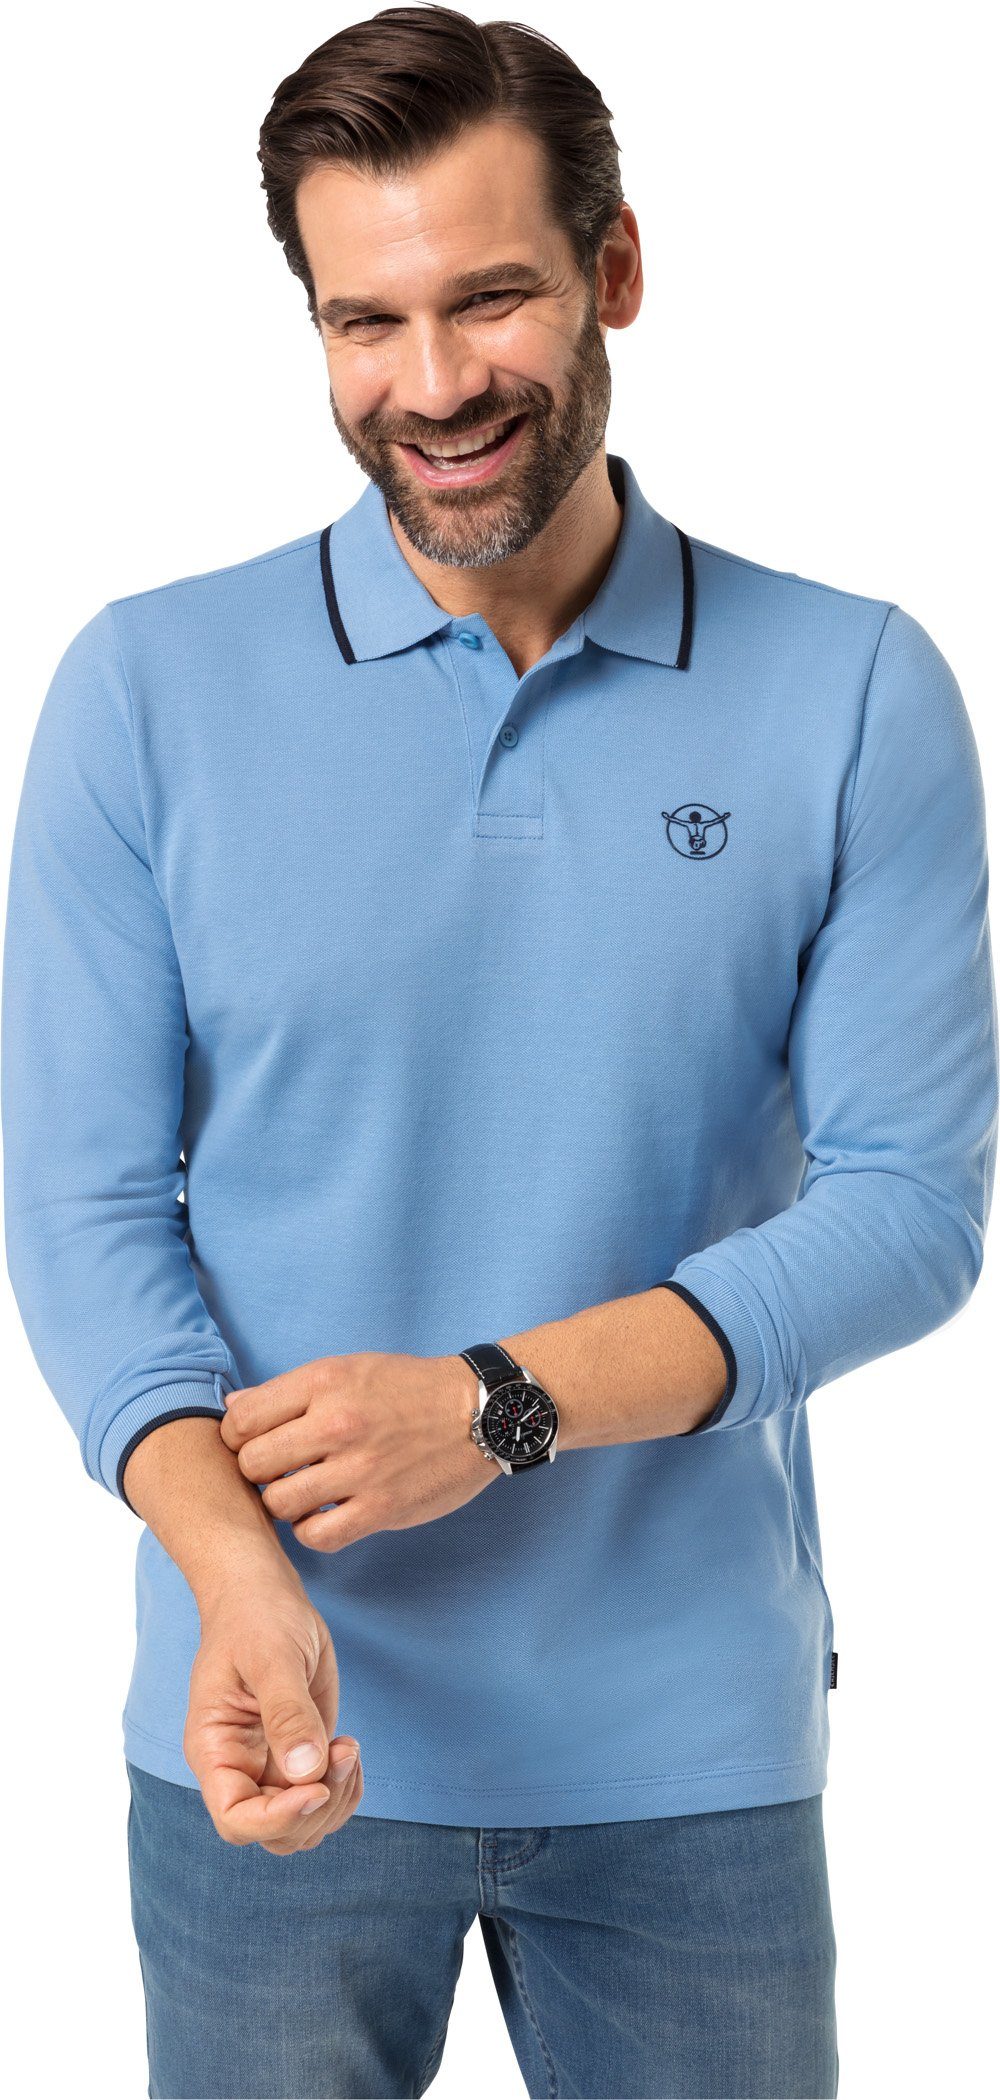 hellblau formstabilem Langarm-Poloshirt Baumwoll-Piqué aus Chiemsee